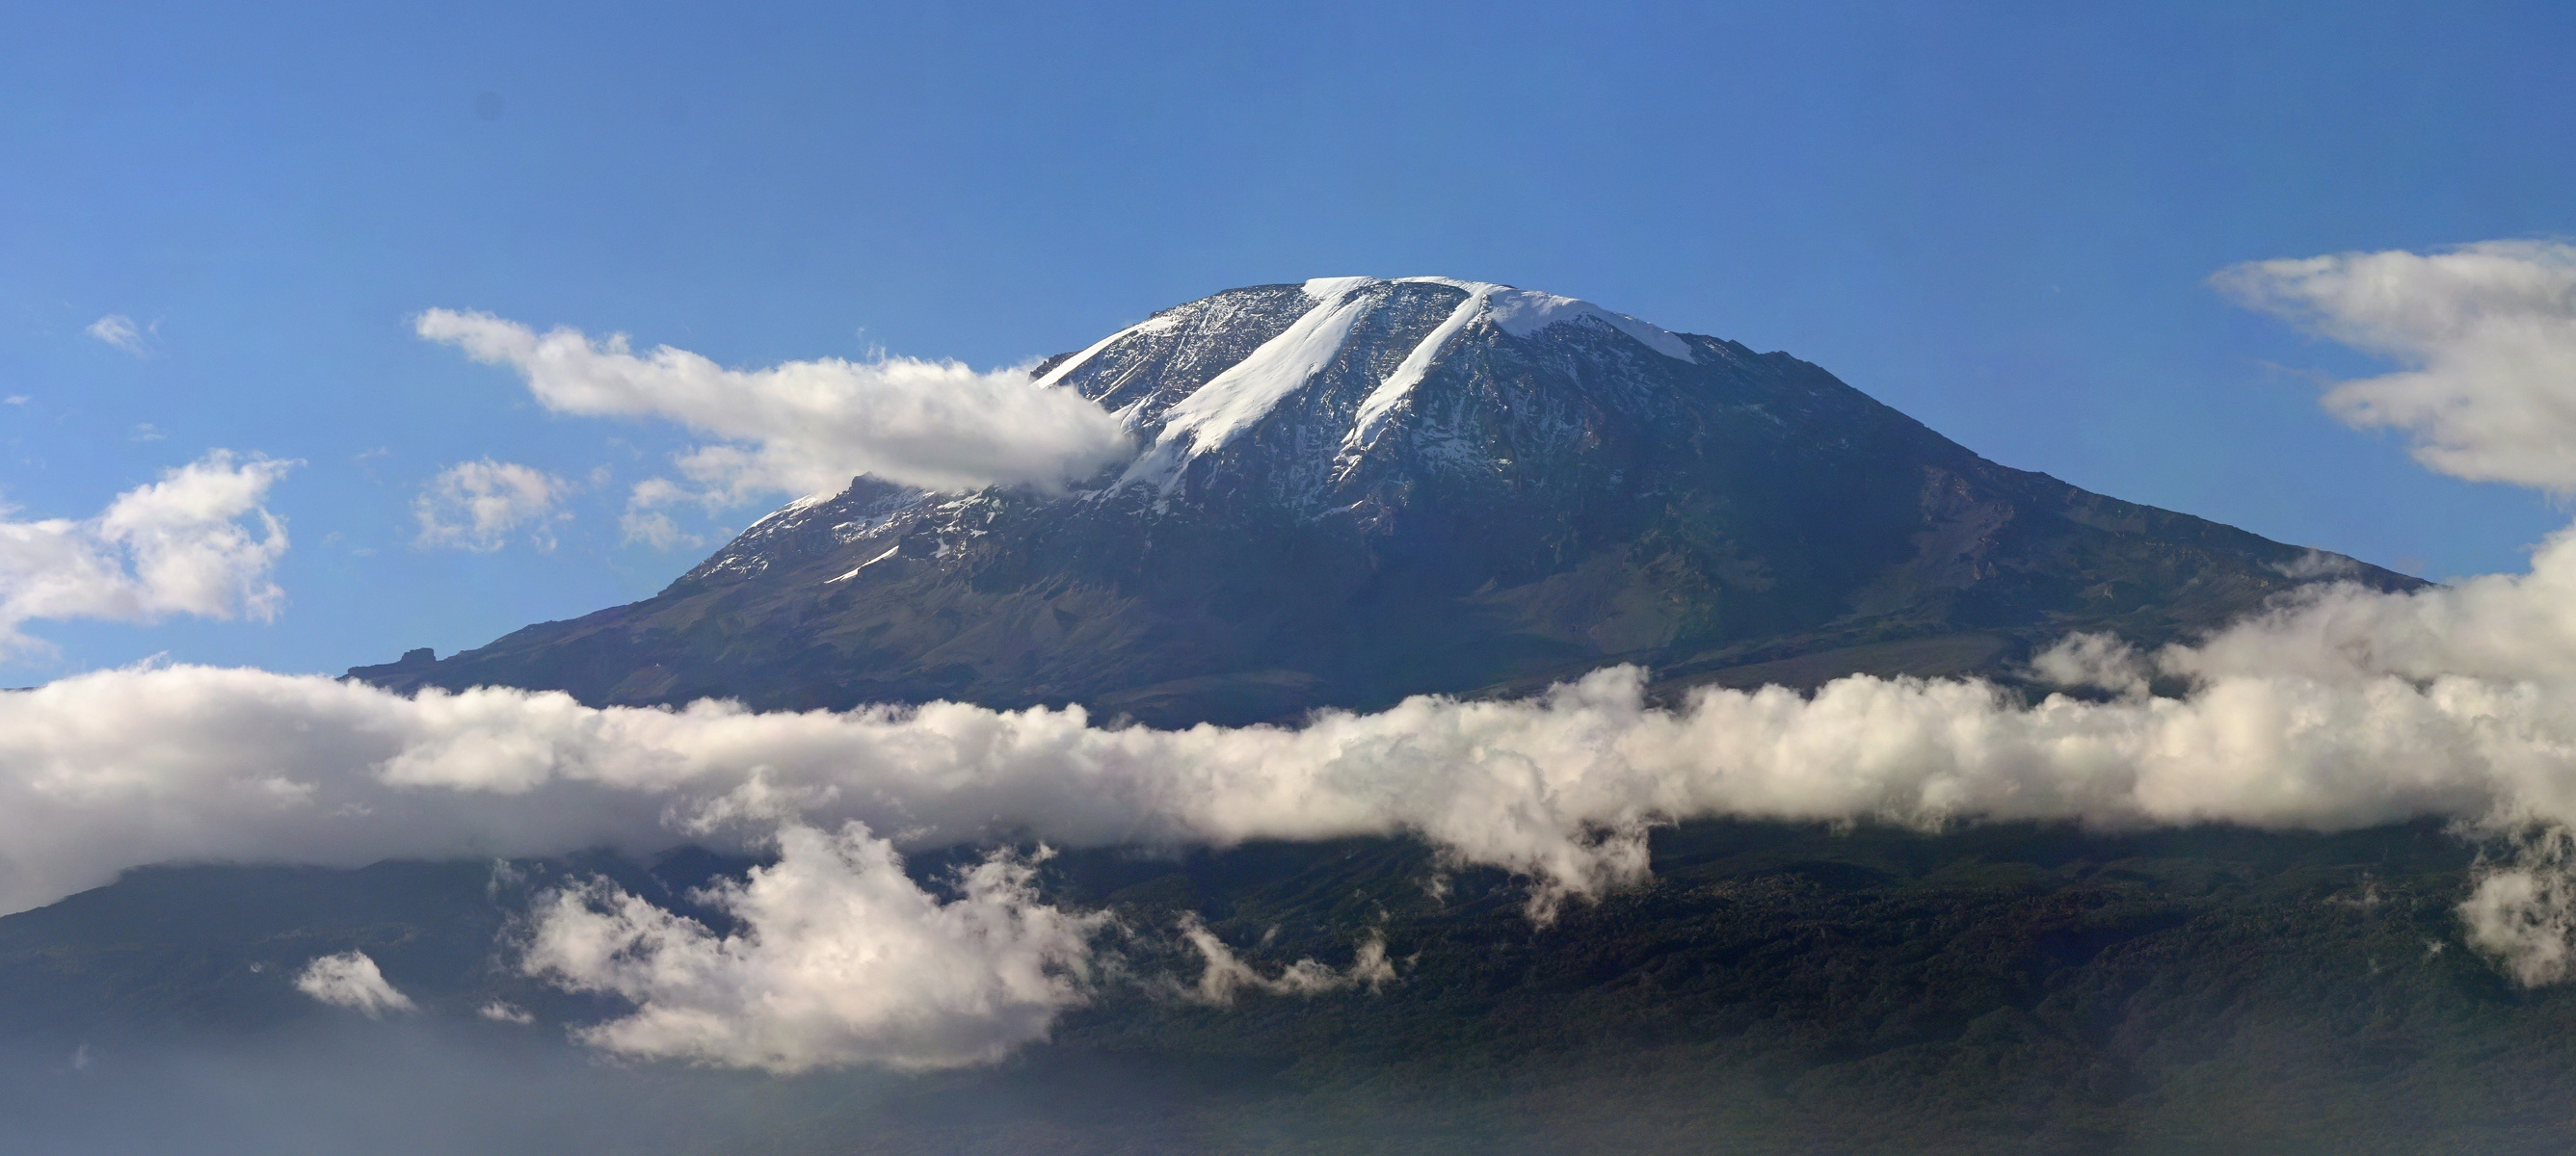 Mount Kilimanjaro, Kilimanjaro wallpaper, Samantha Peltier post, Beautiful imagery, 2680x1200 Dual Screen Desktop